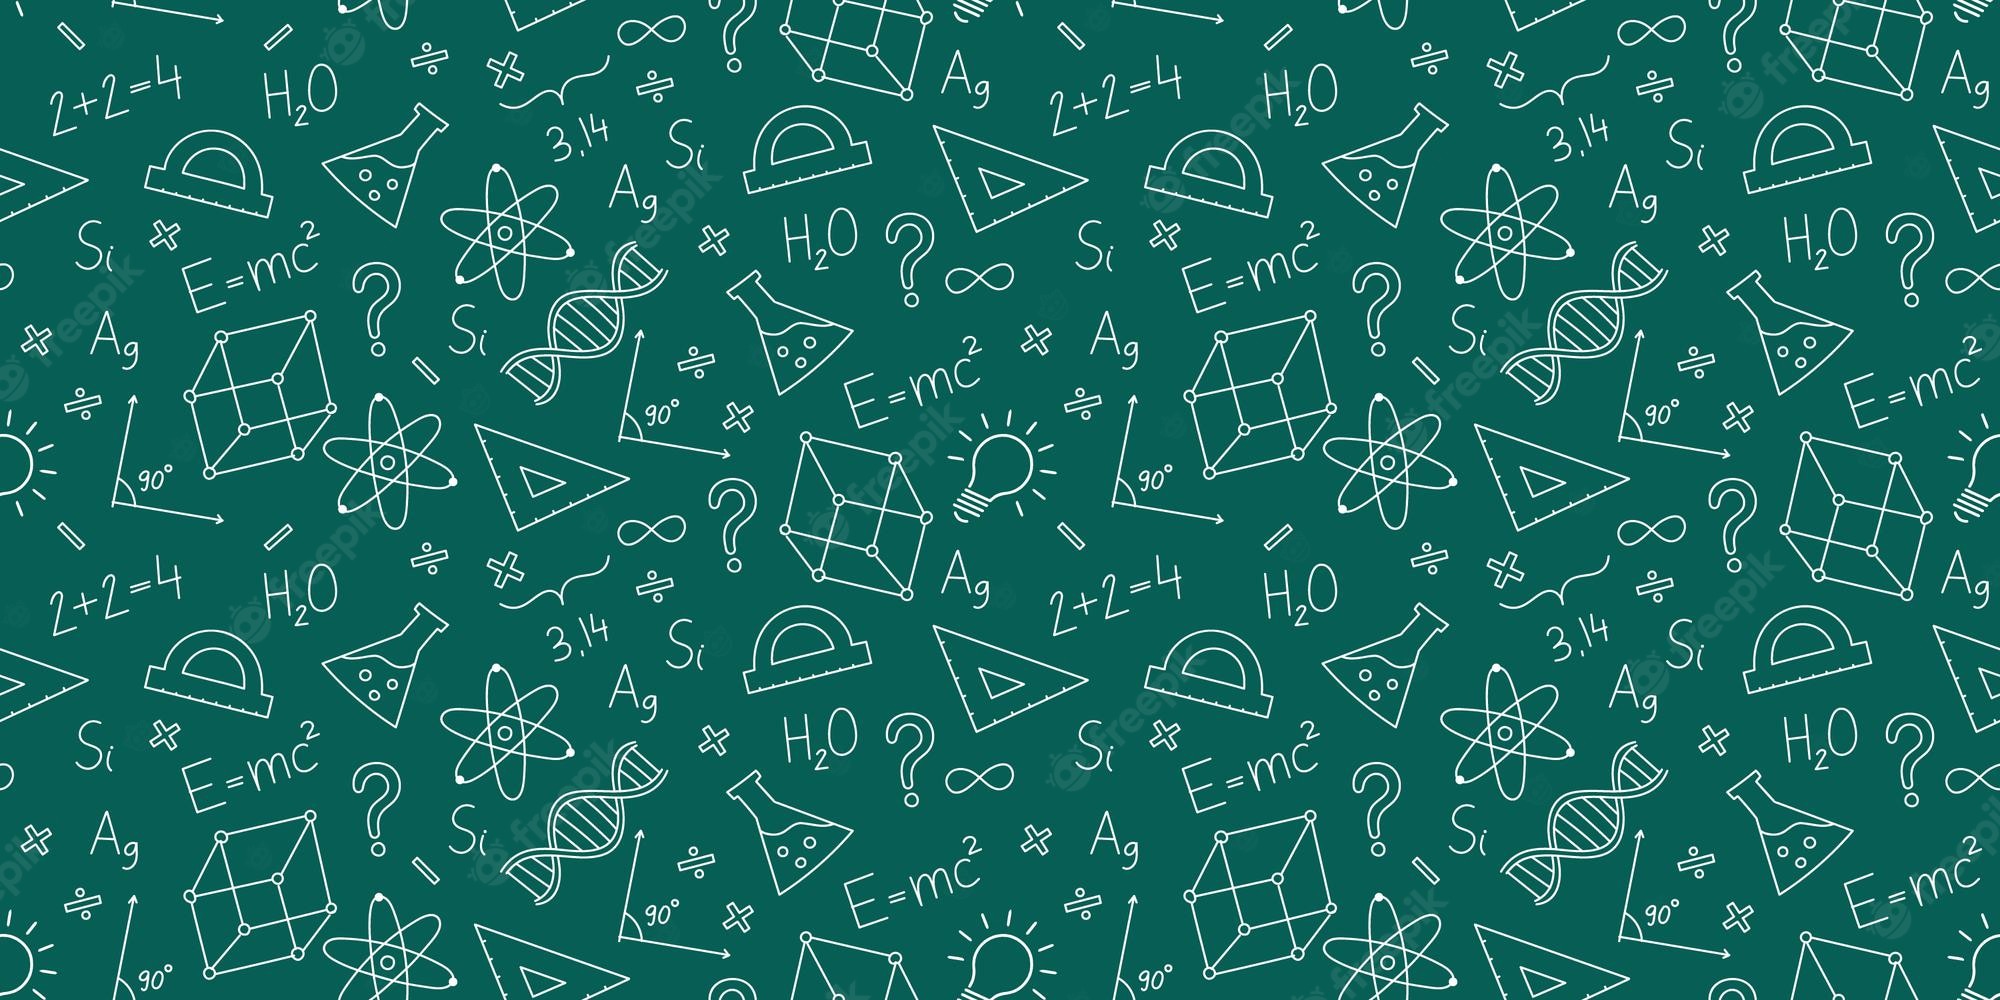 Mathematics Background Image. Free Vectors, & PSD